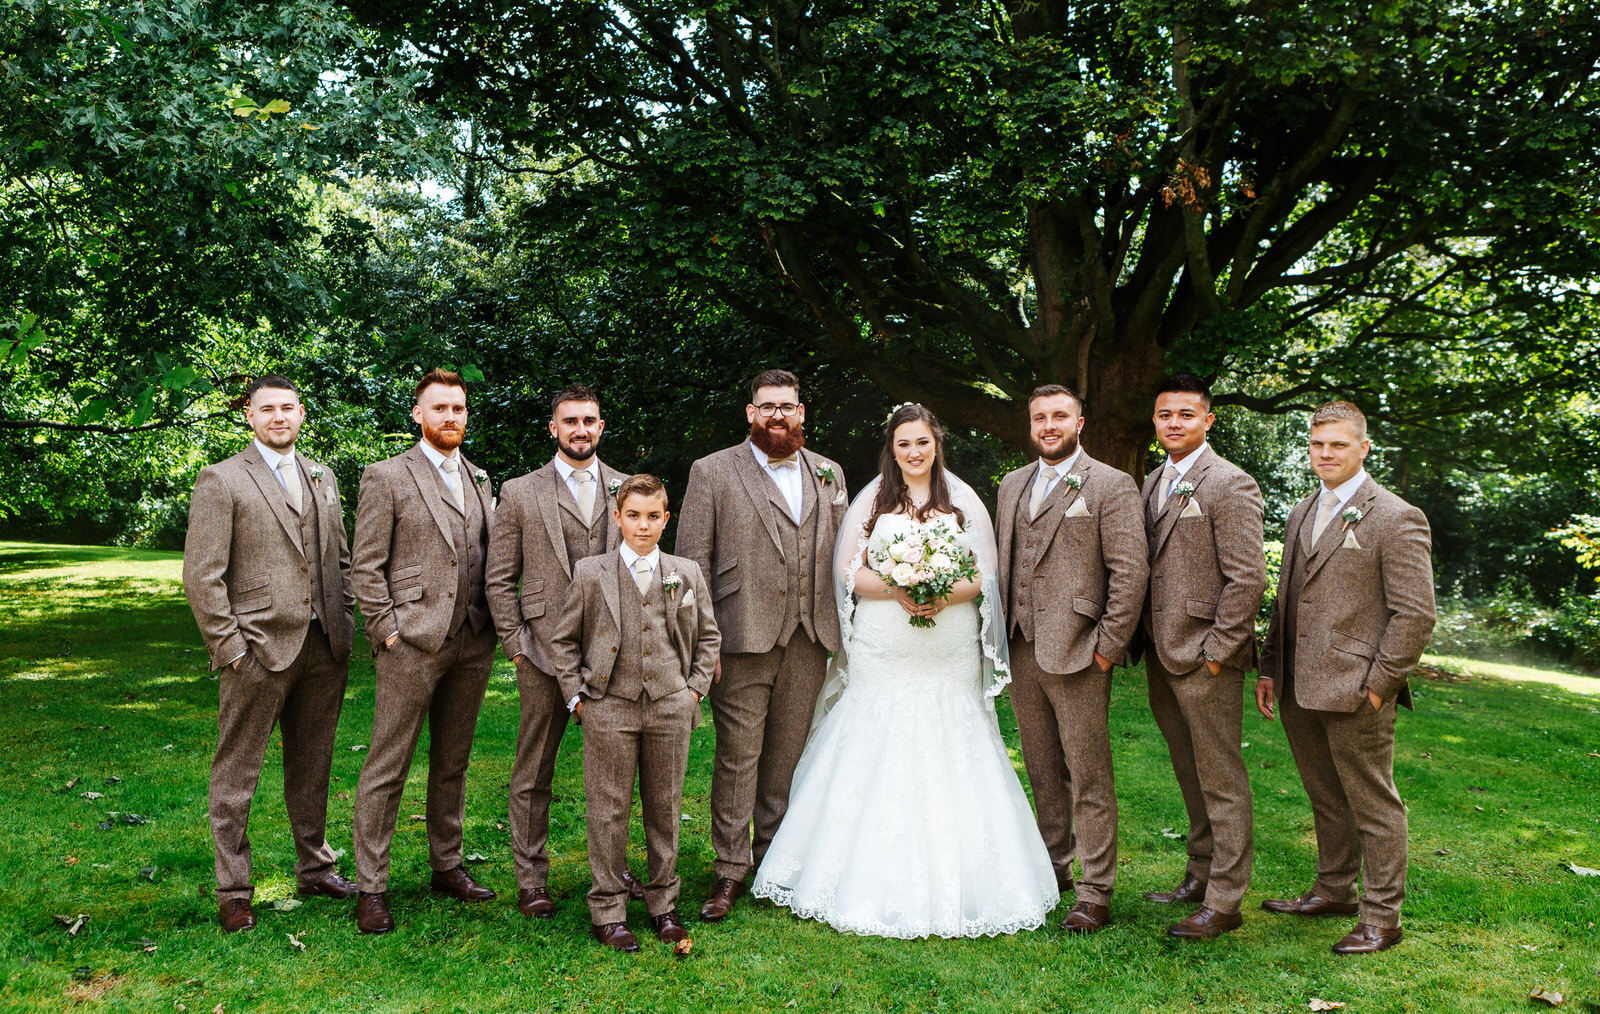 Chloe with her groom Lee and the groom's men